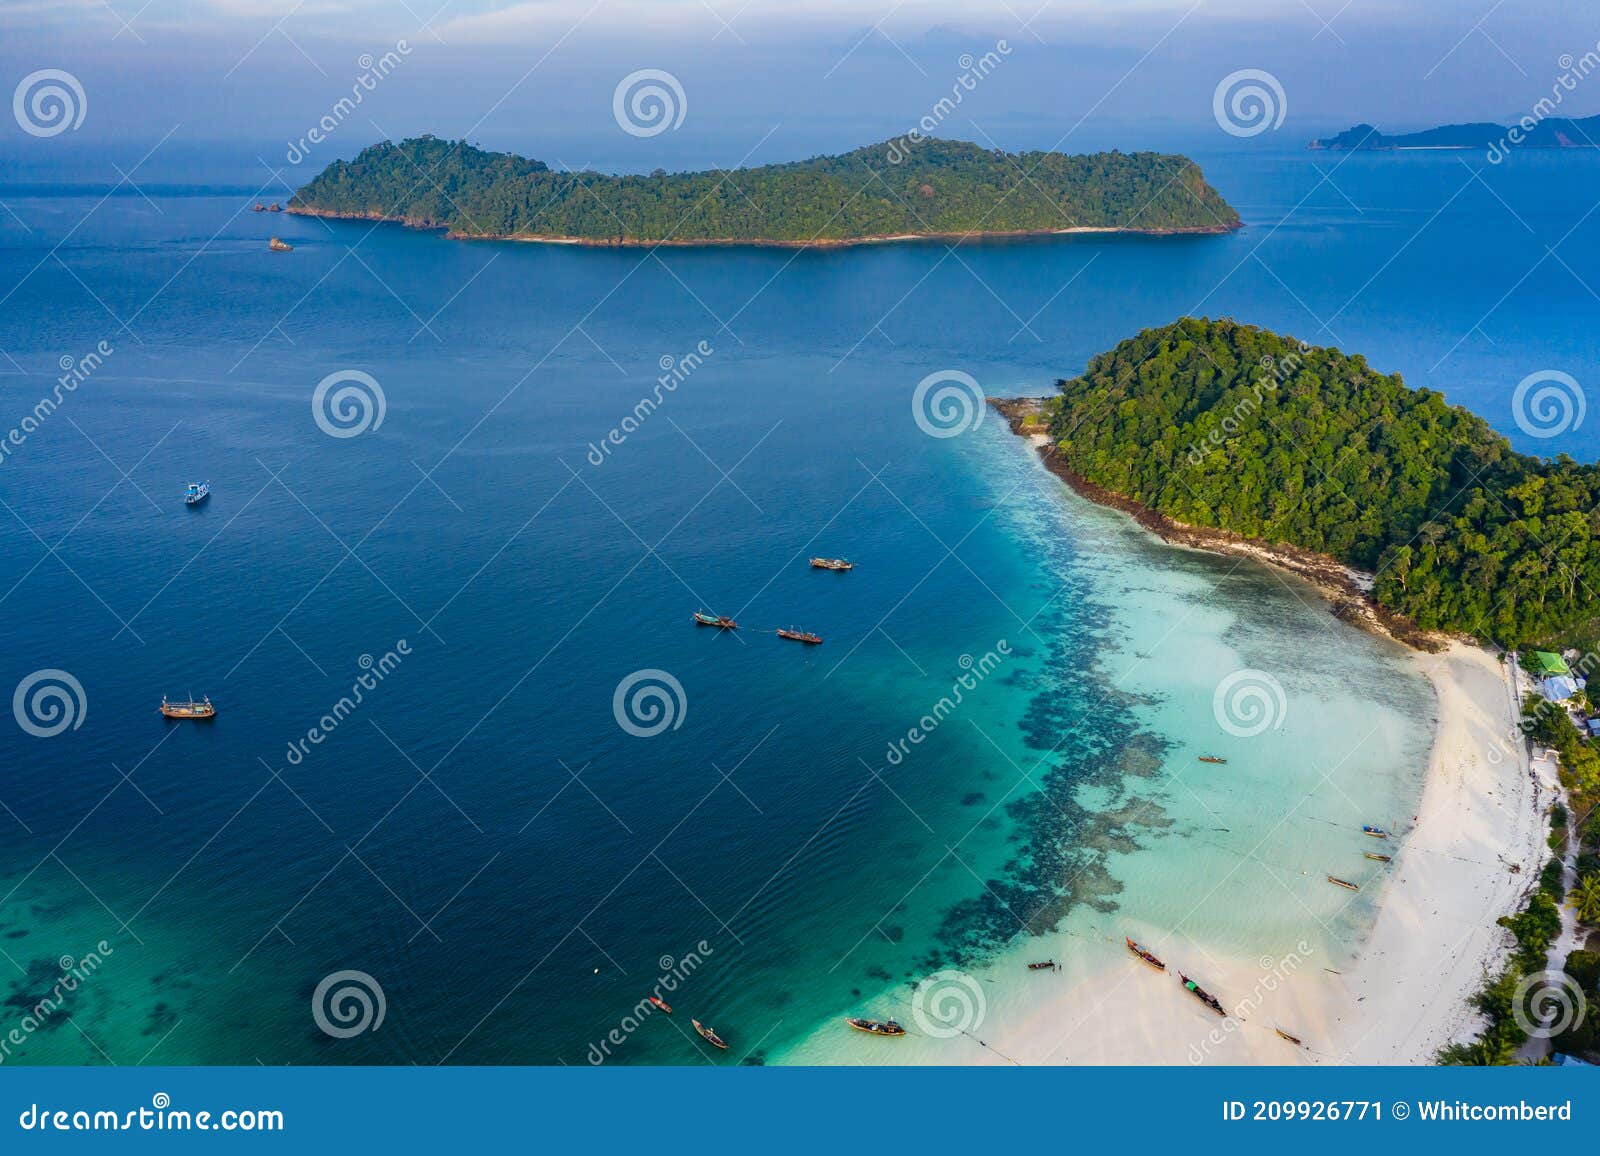 aerial drone view of a small tropical island in the mergui archipelago, myanmar swinton island